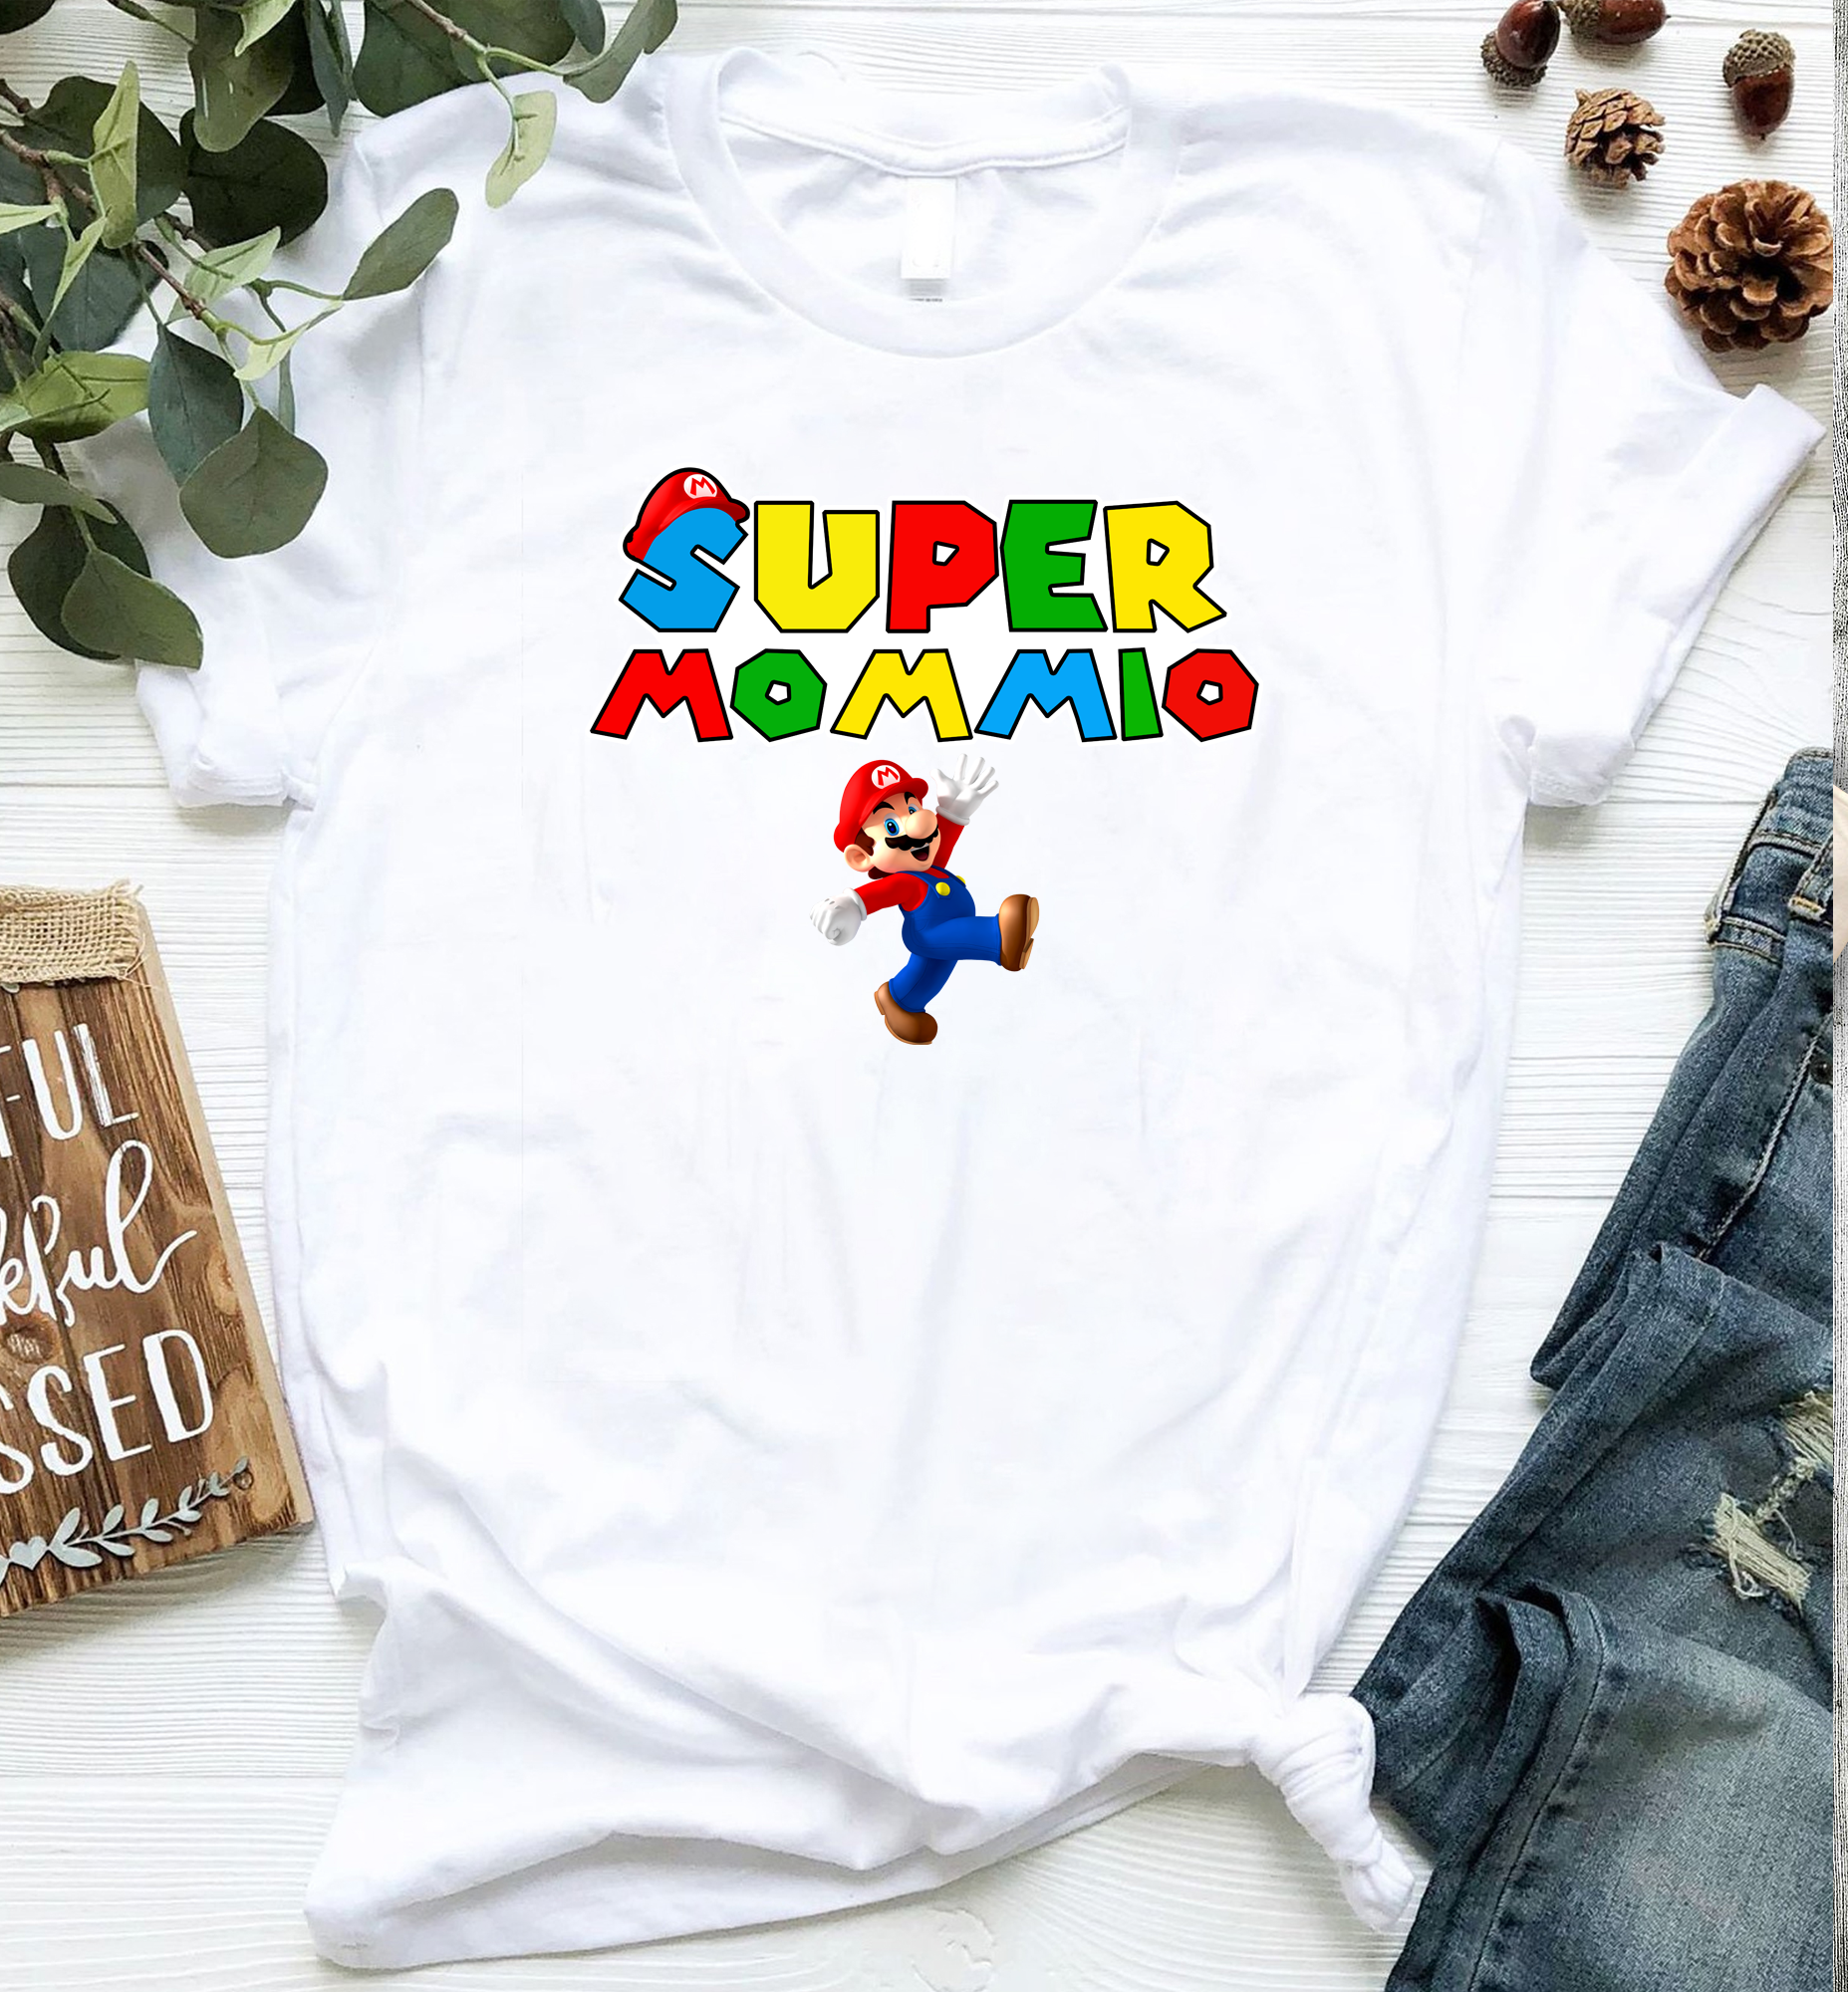 Super Mommio Shirt, Mother's Day Shirt